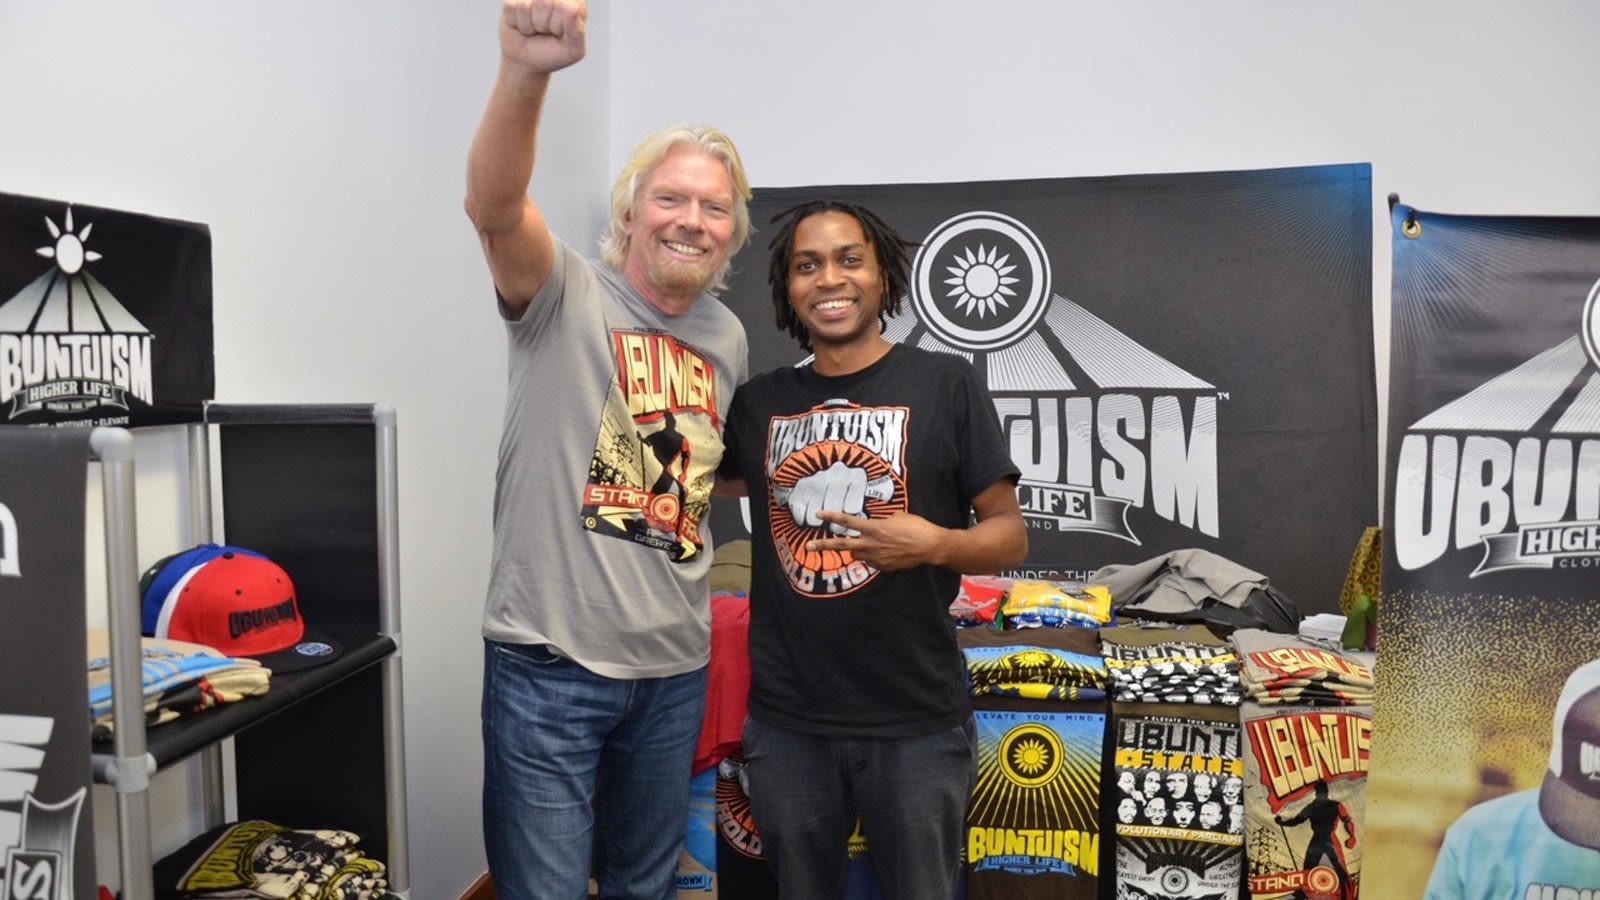 Richard Branson and man with Unbuntuism slogan shirt with surrounding merchandise